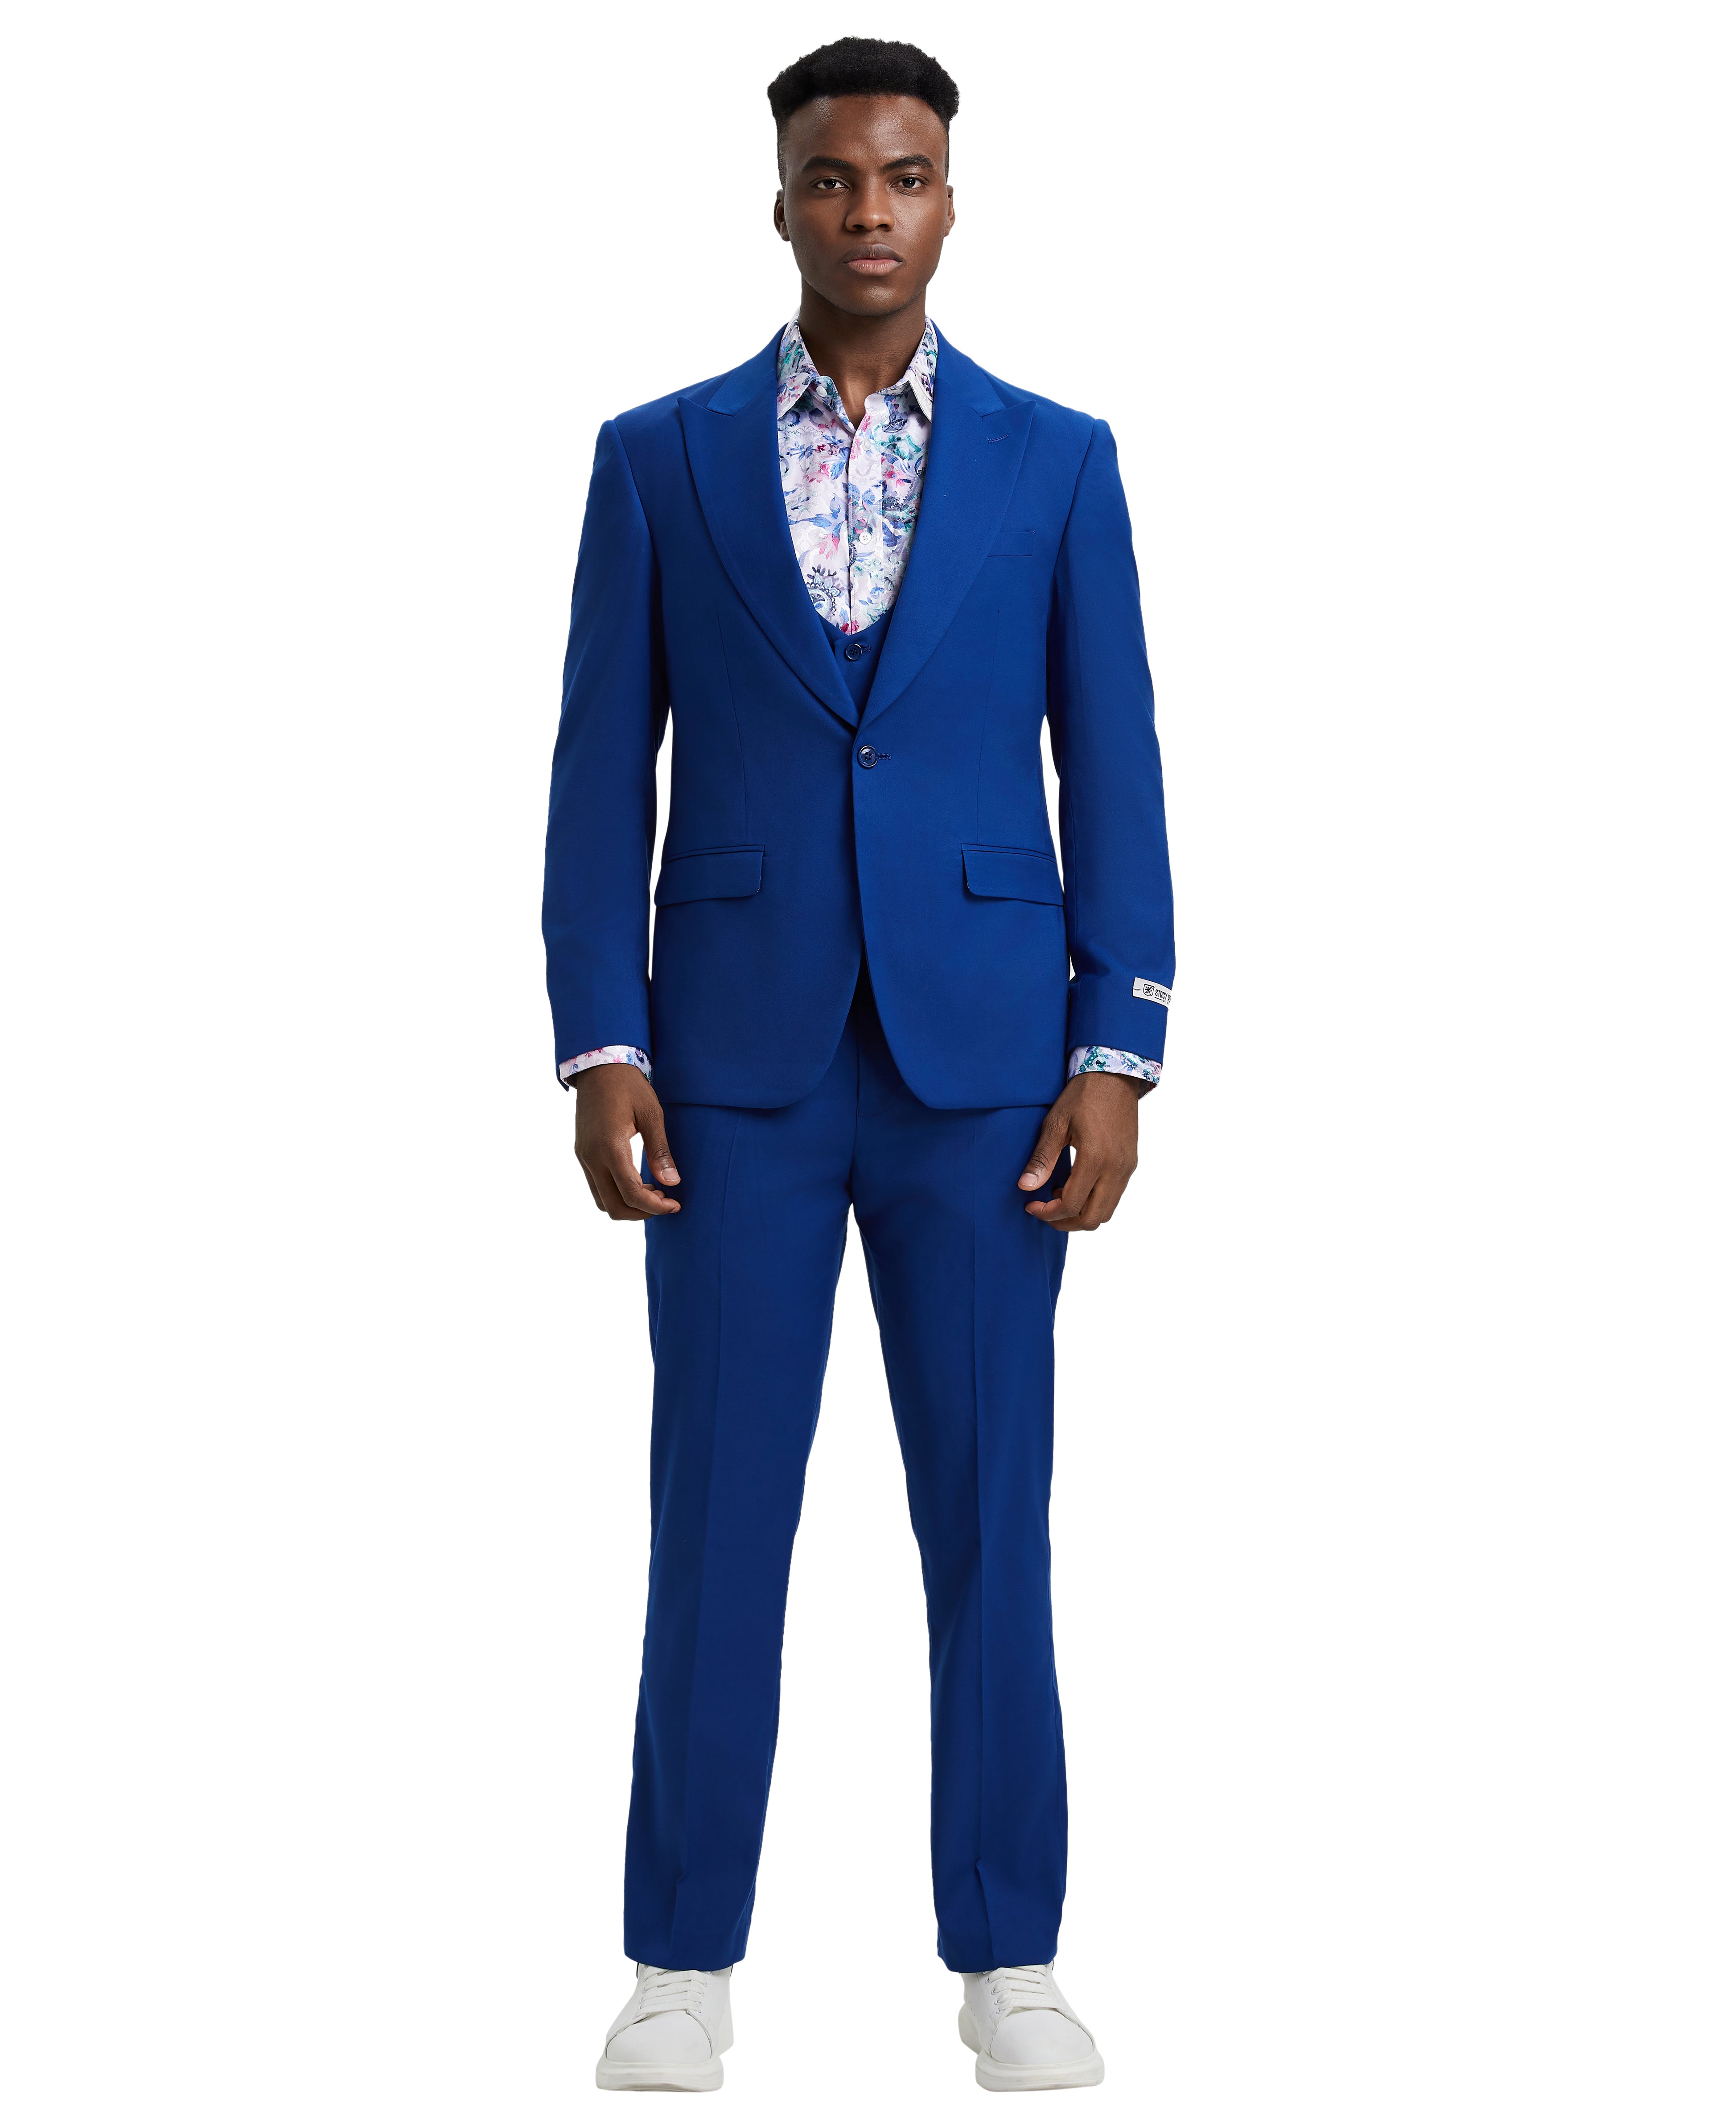 Stacy Adams Hybrid Fit U-Shaped Vested Suit, Cobalt Blue